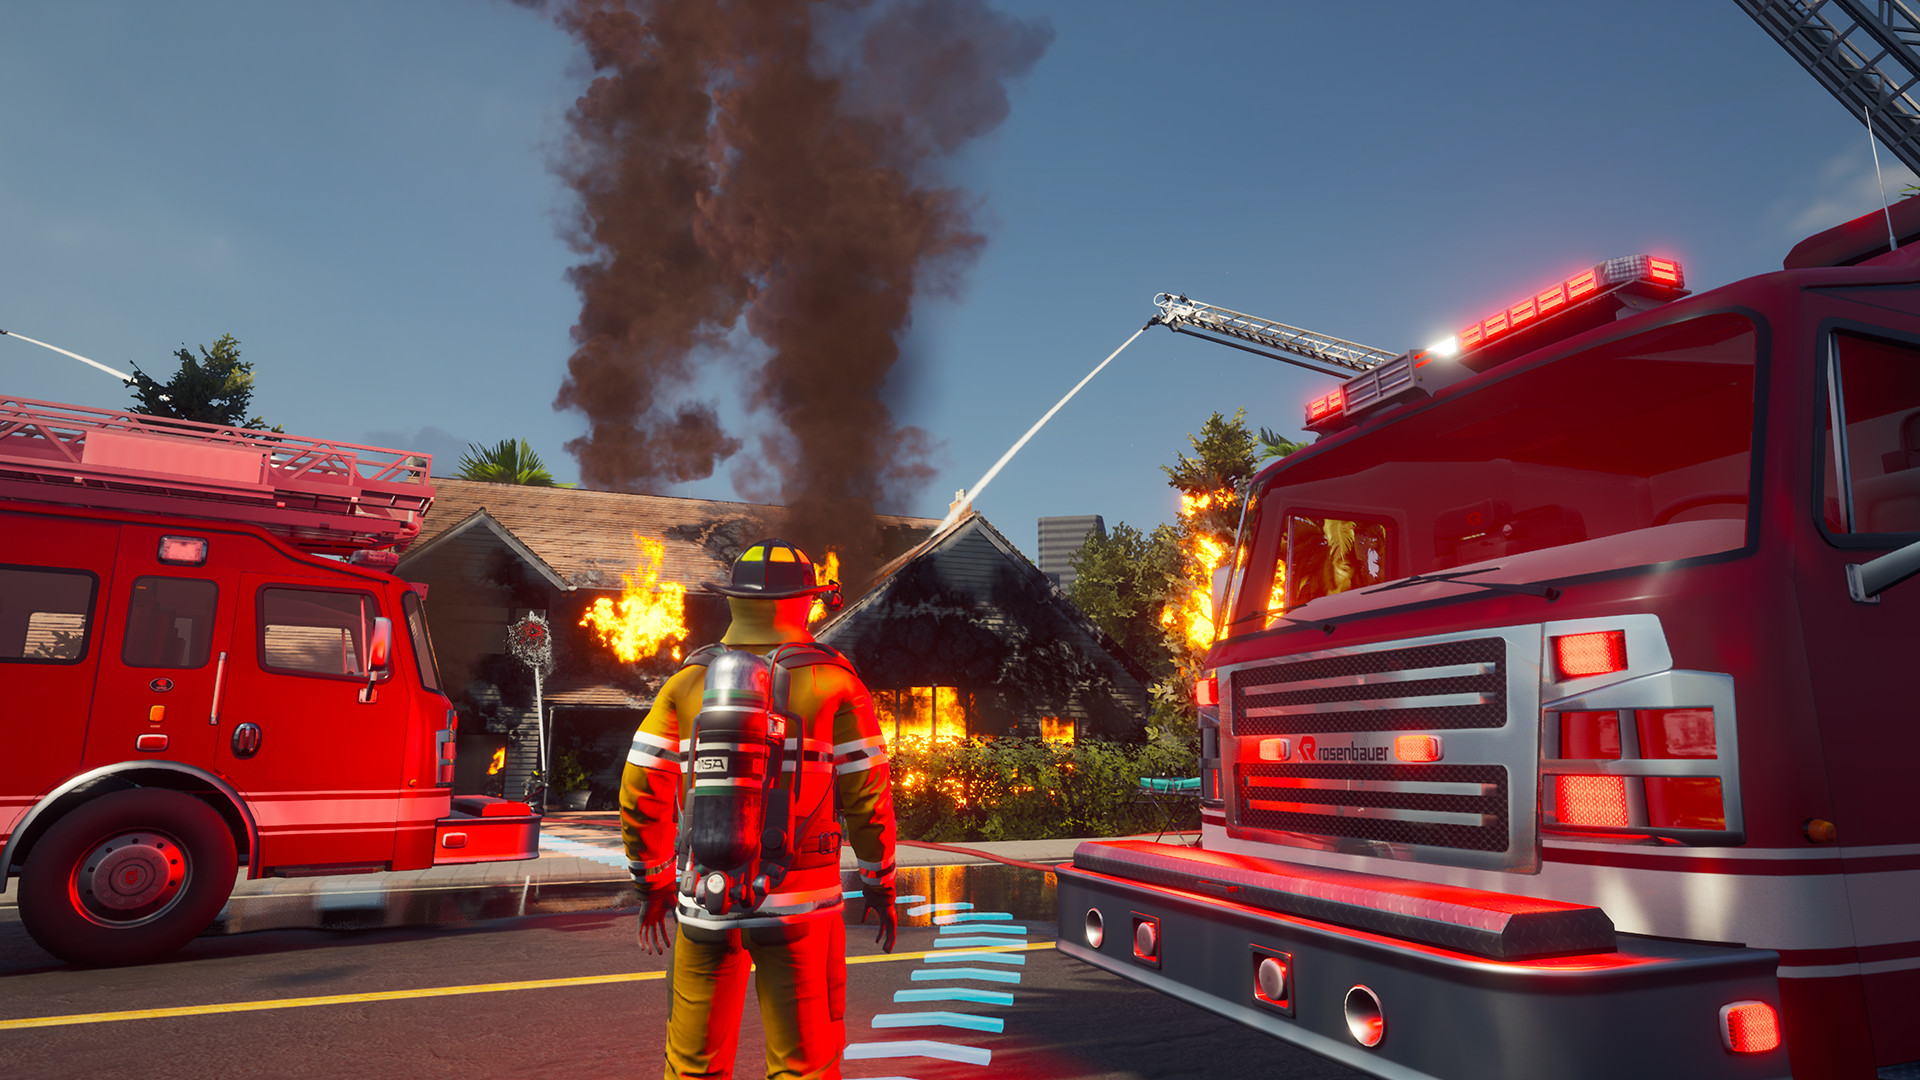 Firefighting Simulator - The Squad on Steam